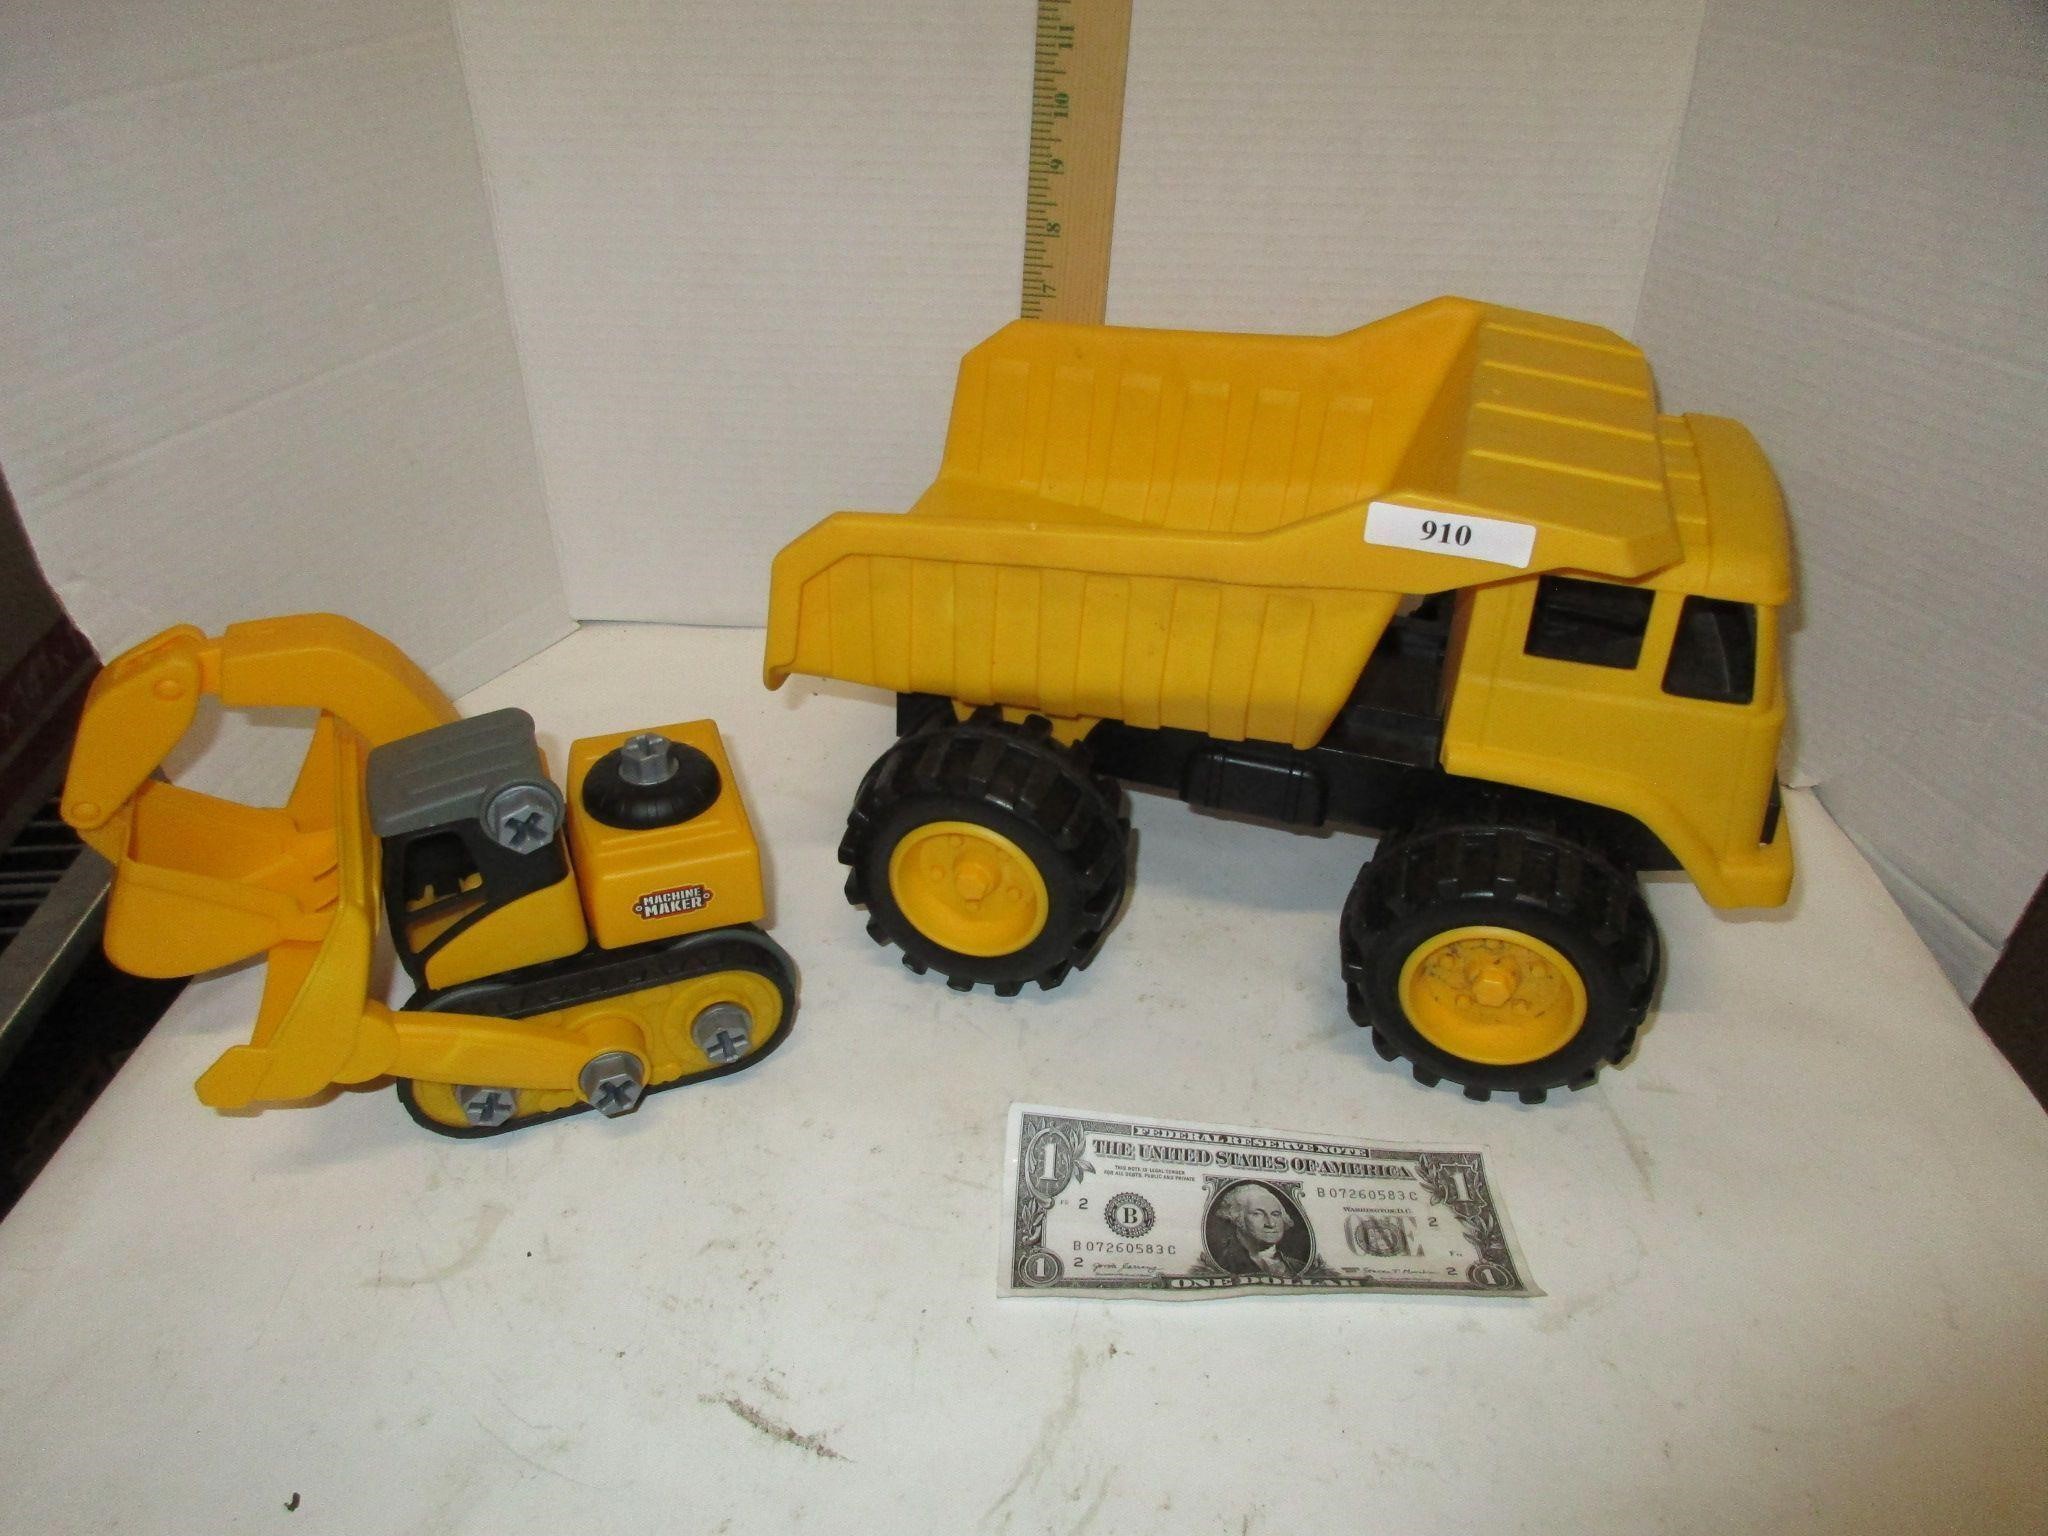 Toy dump truck with caterpillar